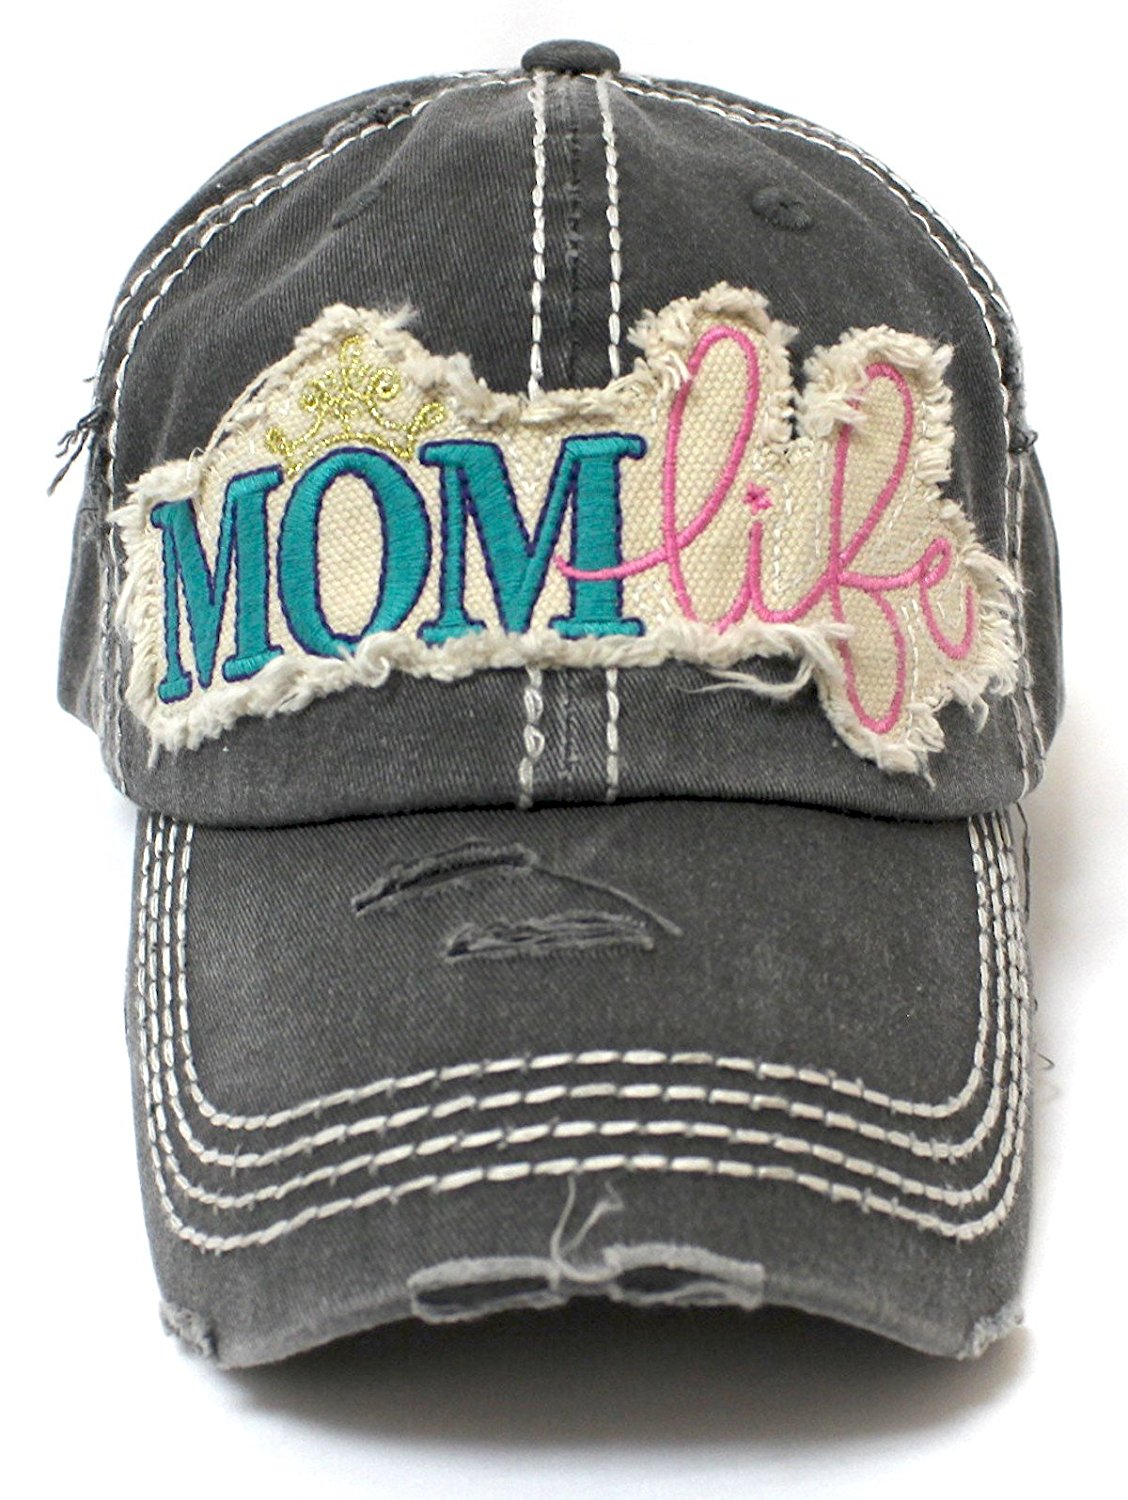 CAPS 'N VINTAGE BLK MOM Life Princess Patch Embroidery Cap w/Gold Crown Monogram Detail - Caps 'N Vintage 